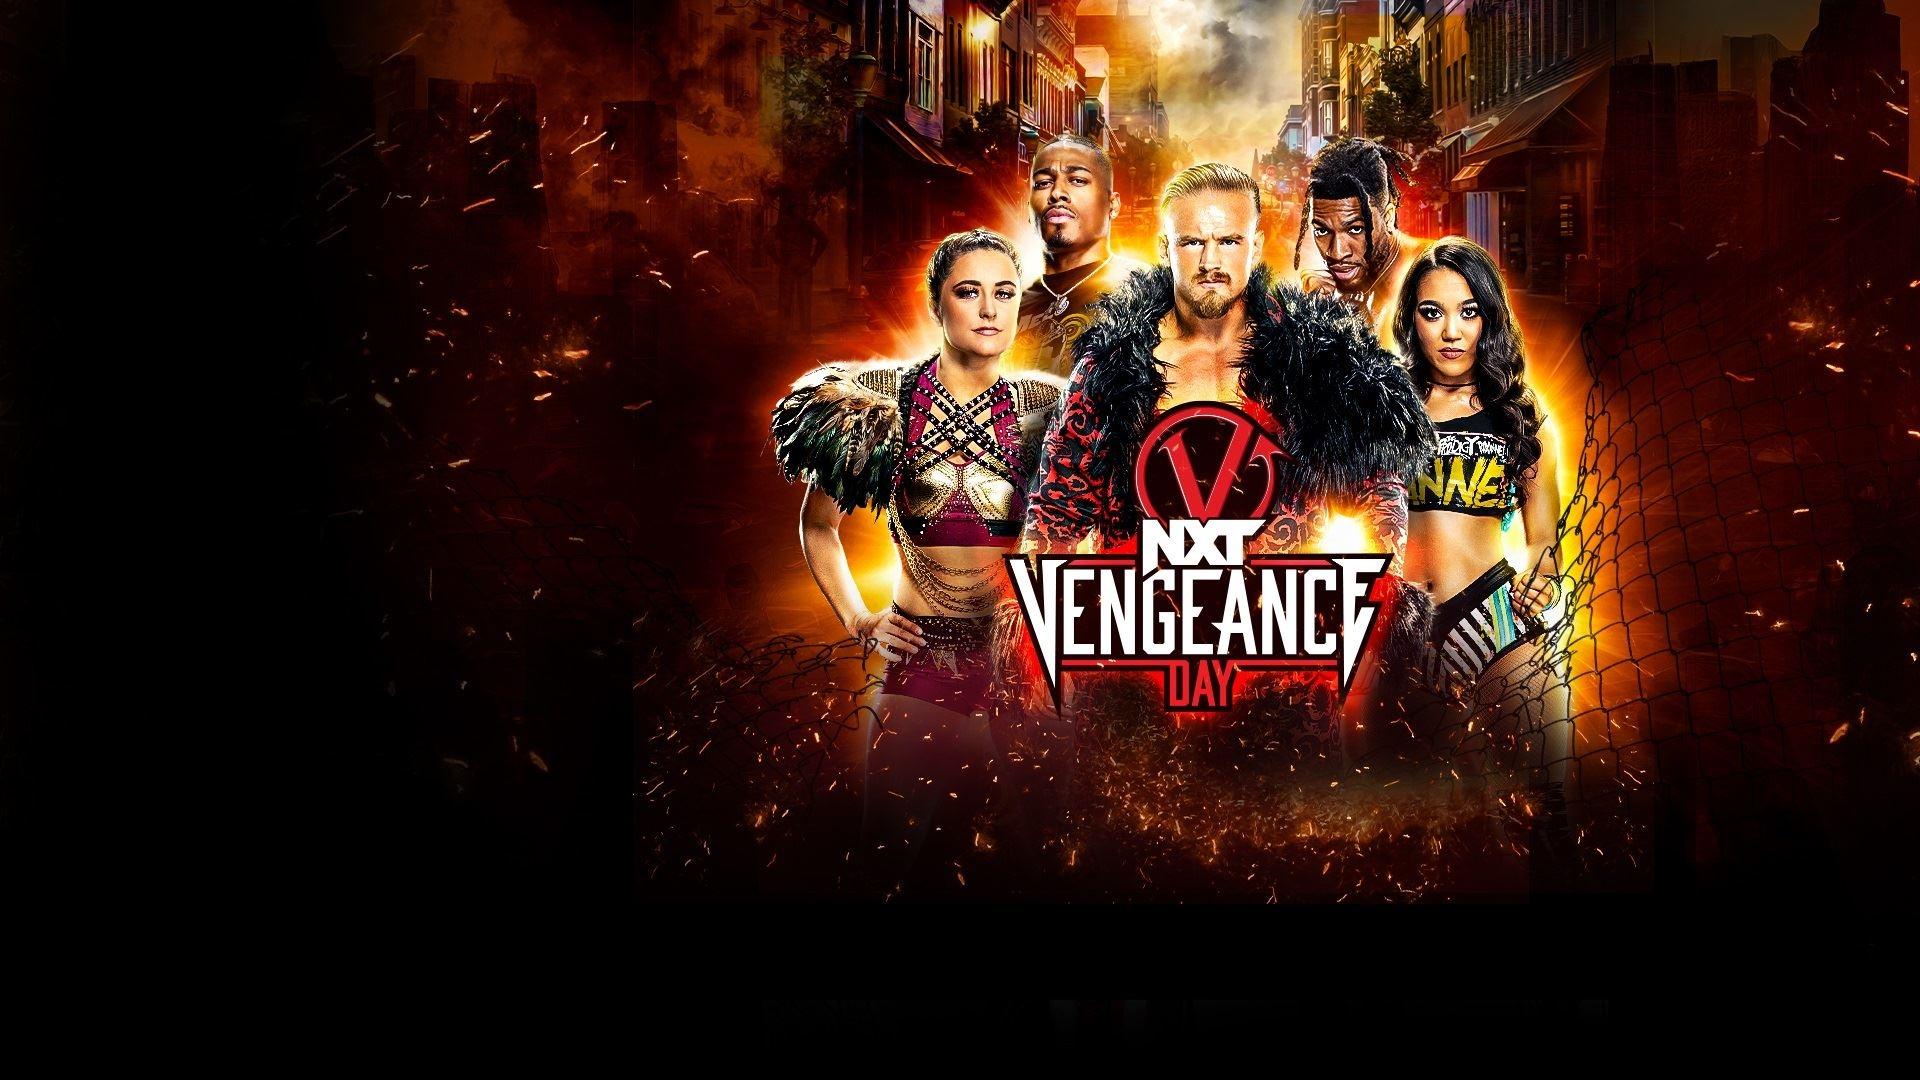 WWE NXT Vengeance Day 2024